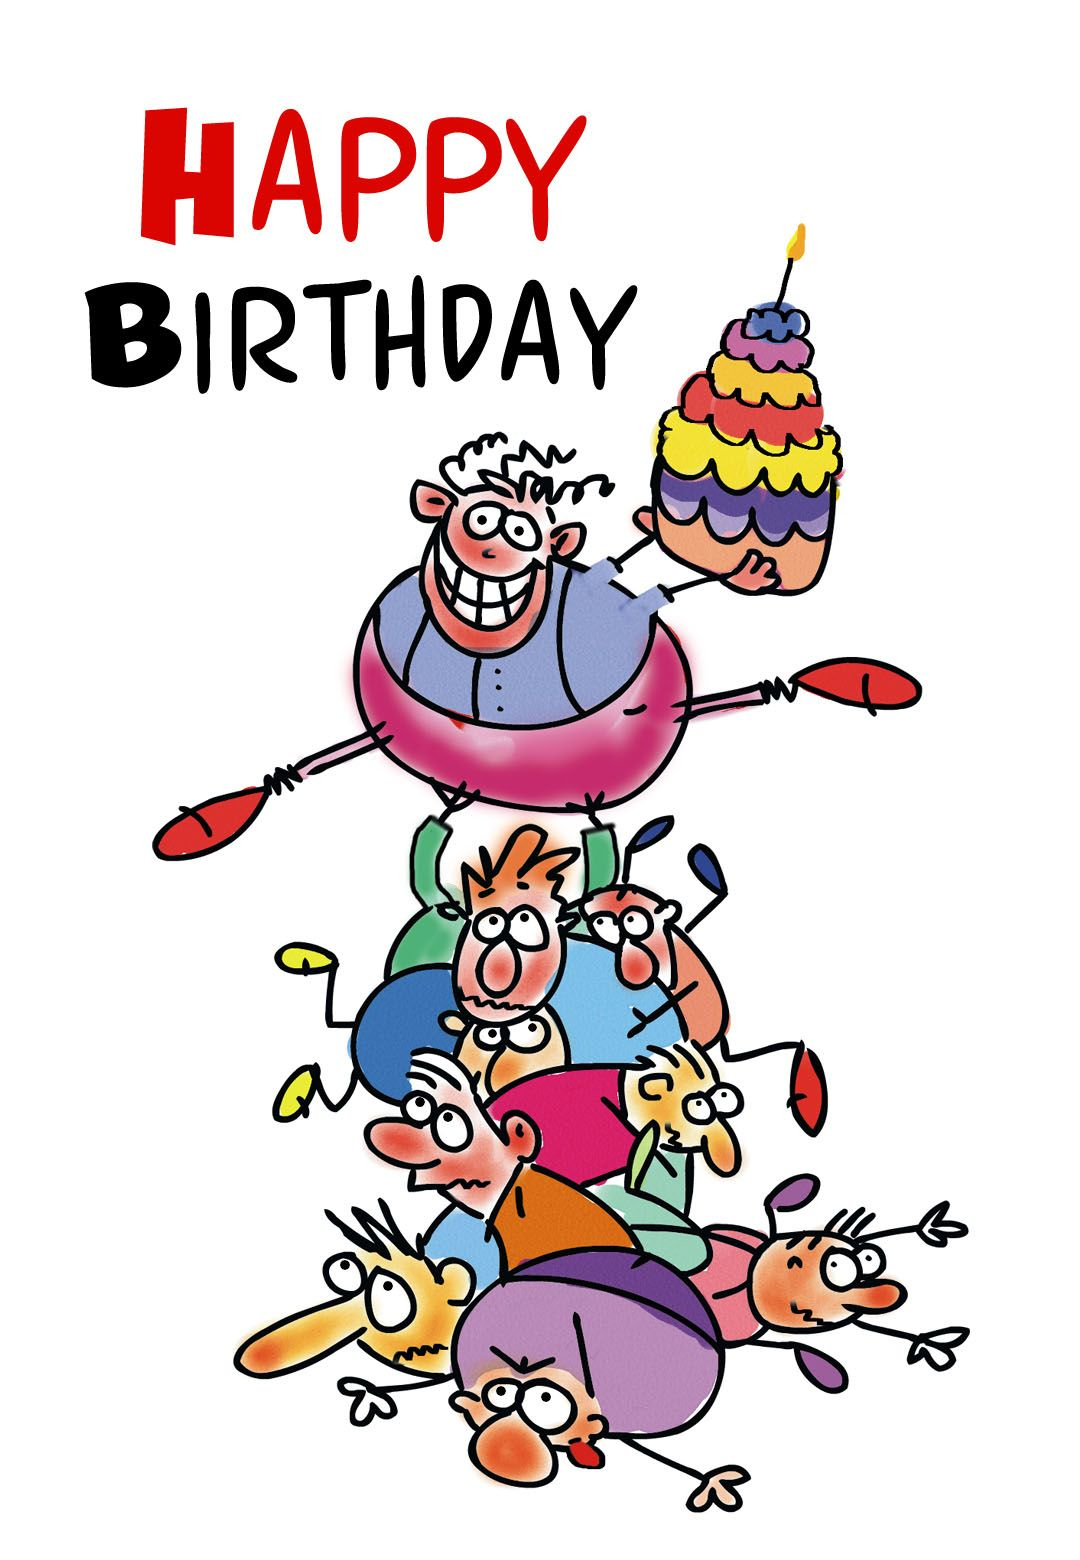 Free Printable Funny Birthday Greeting Card | Gifts To Make | Free - Free Printable Birthday Cards To Color